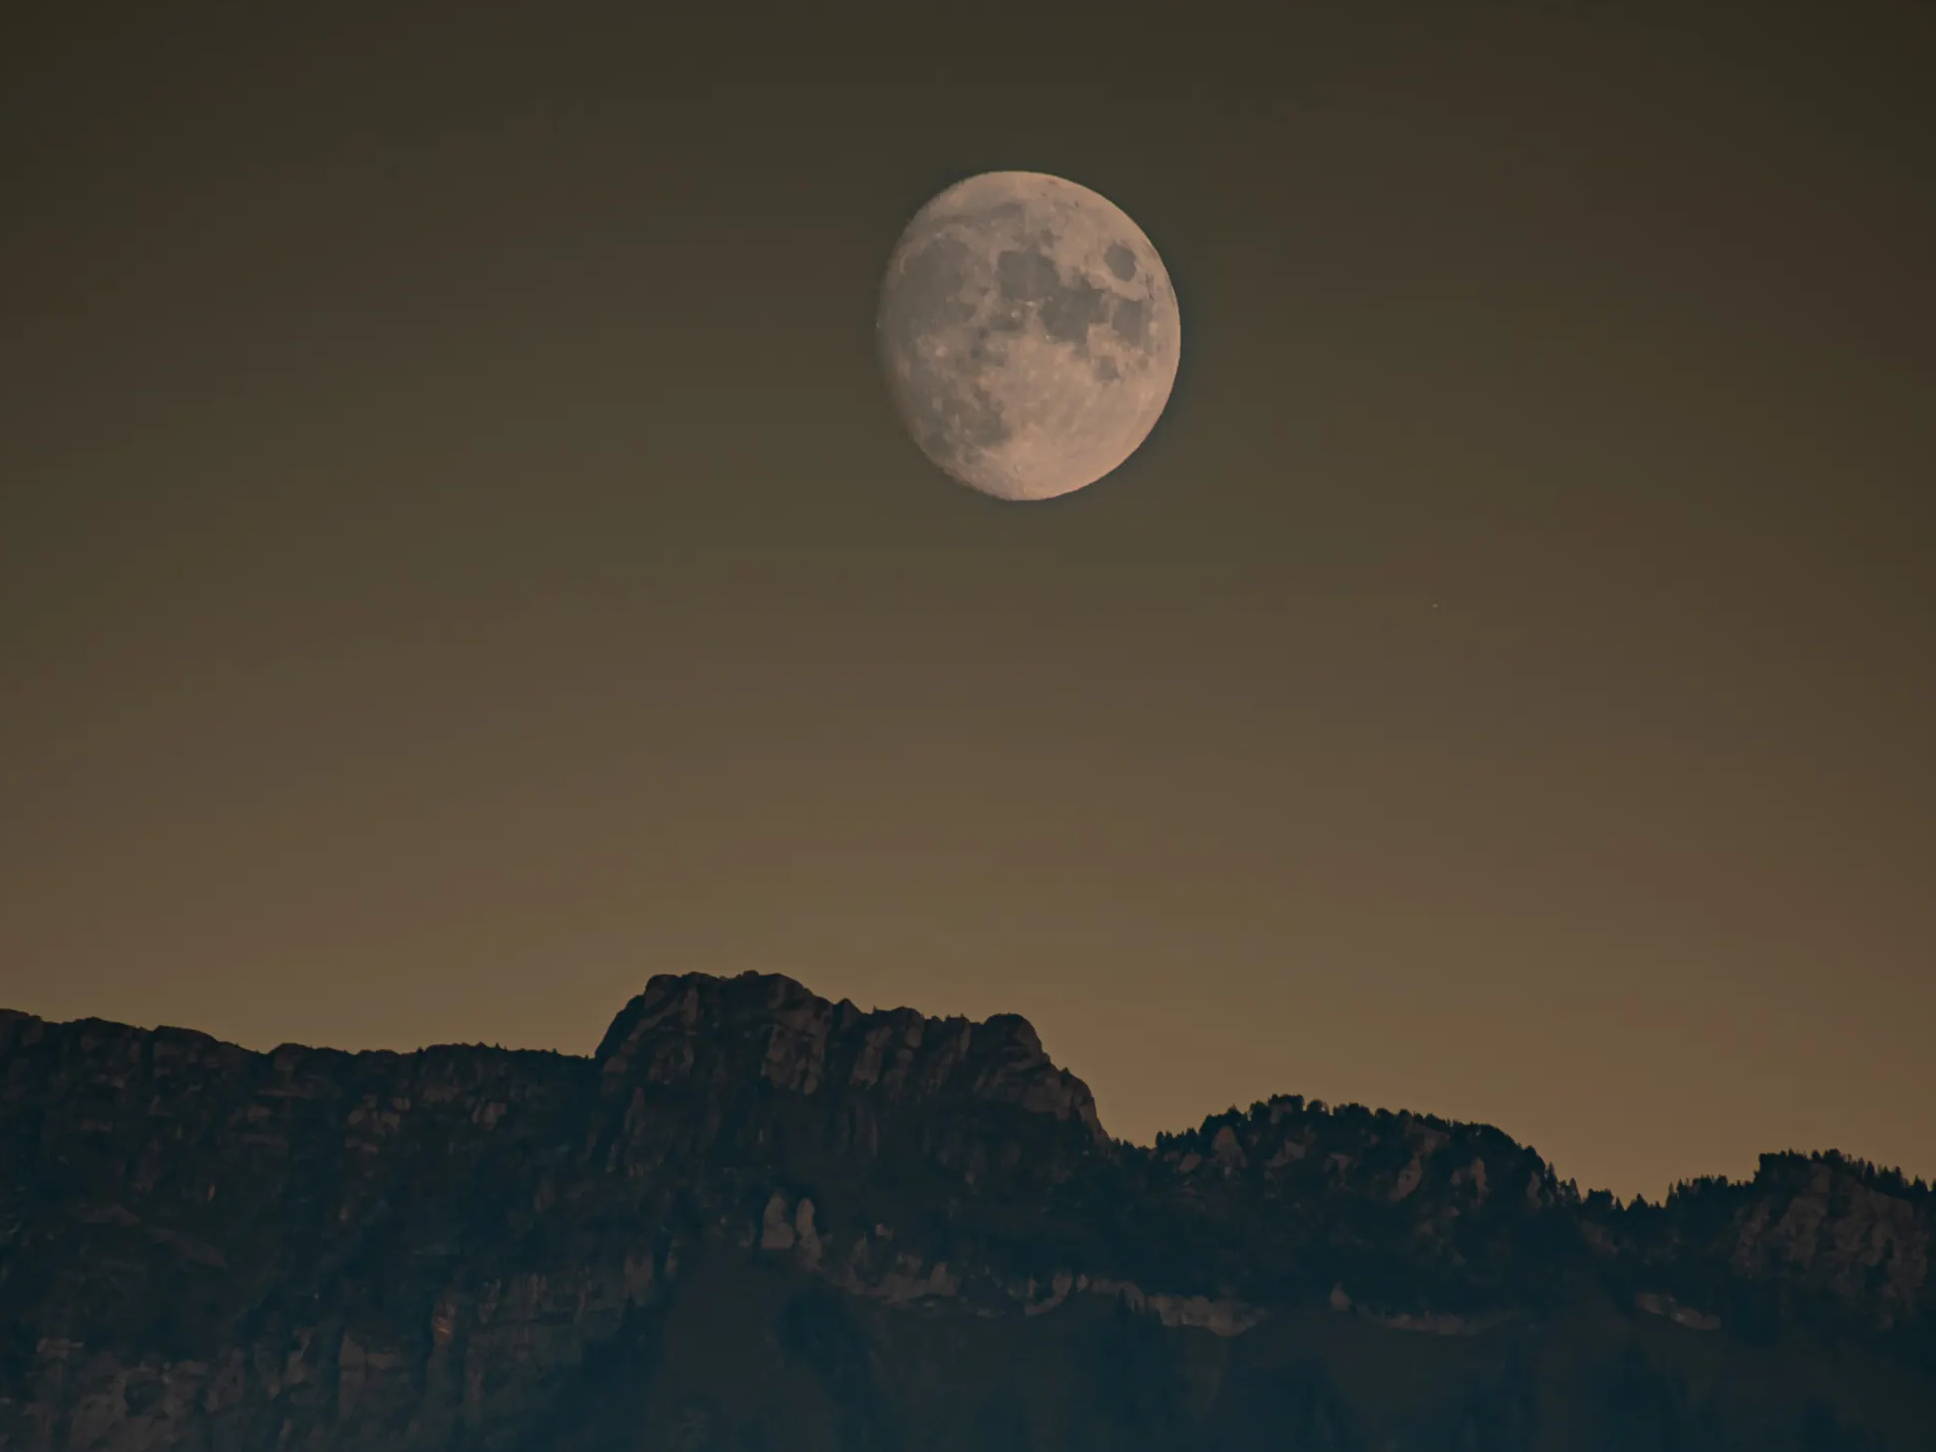 Full moon above a mountain range